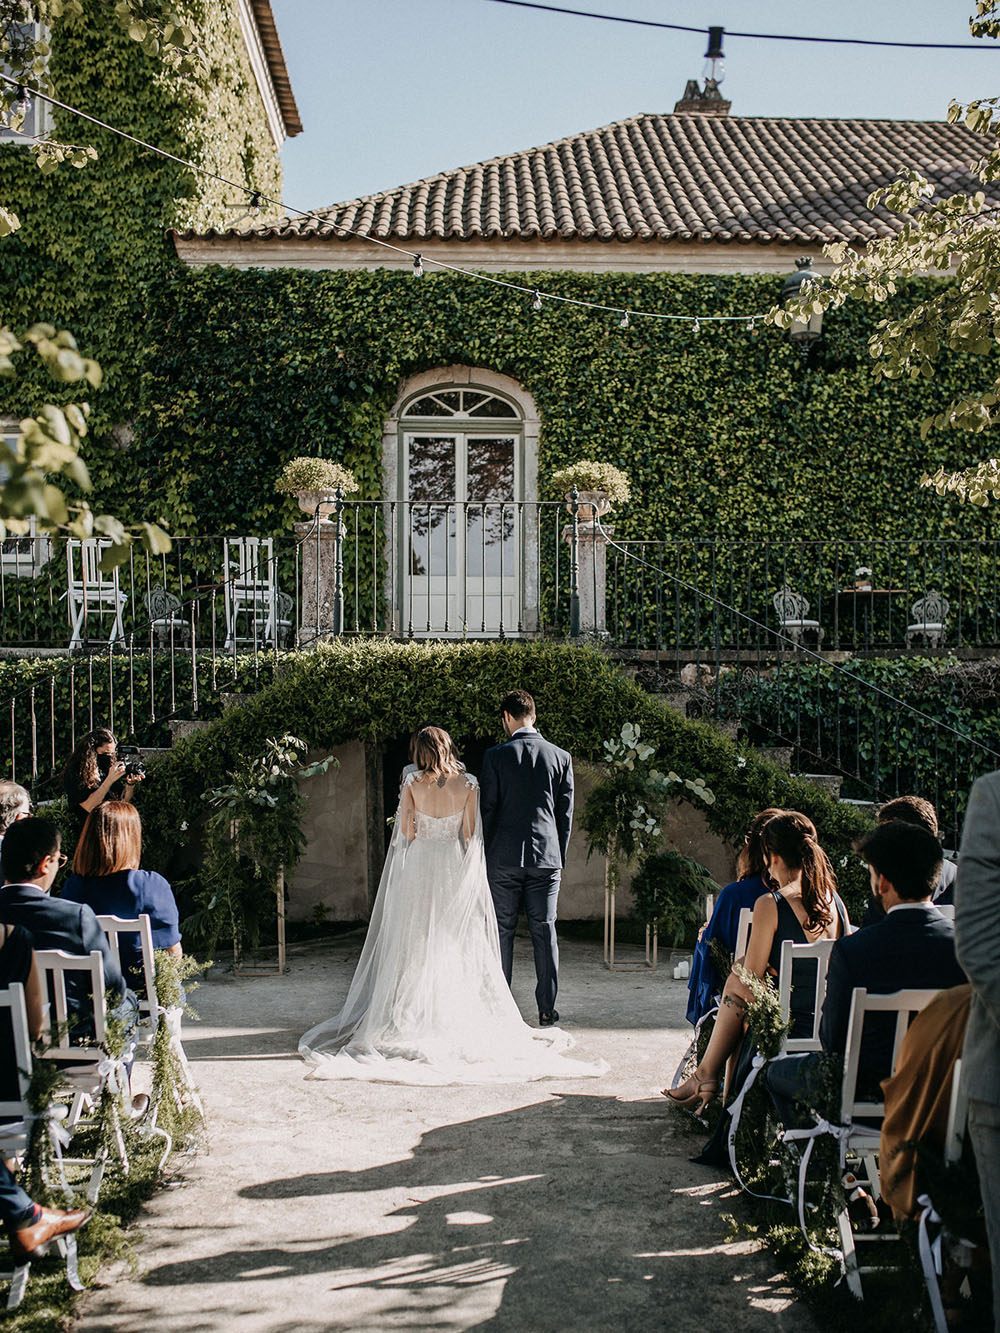 Enchanting celestial themed wedding at the historic Solar de Pancas in Portugal